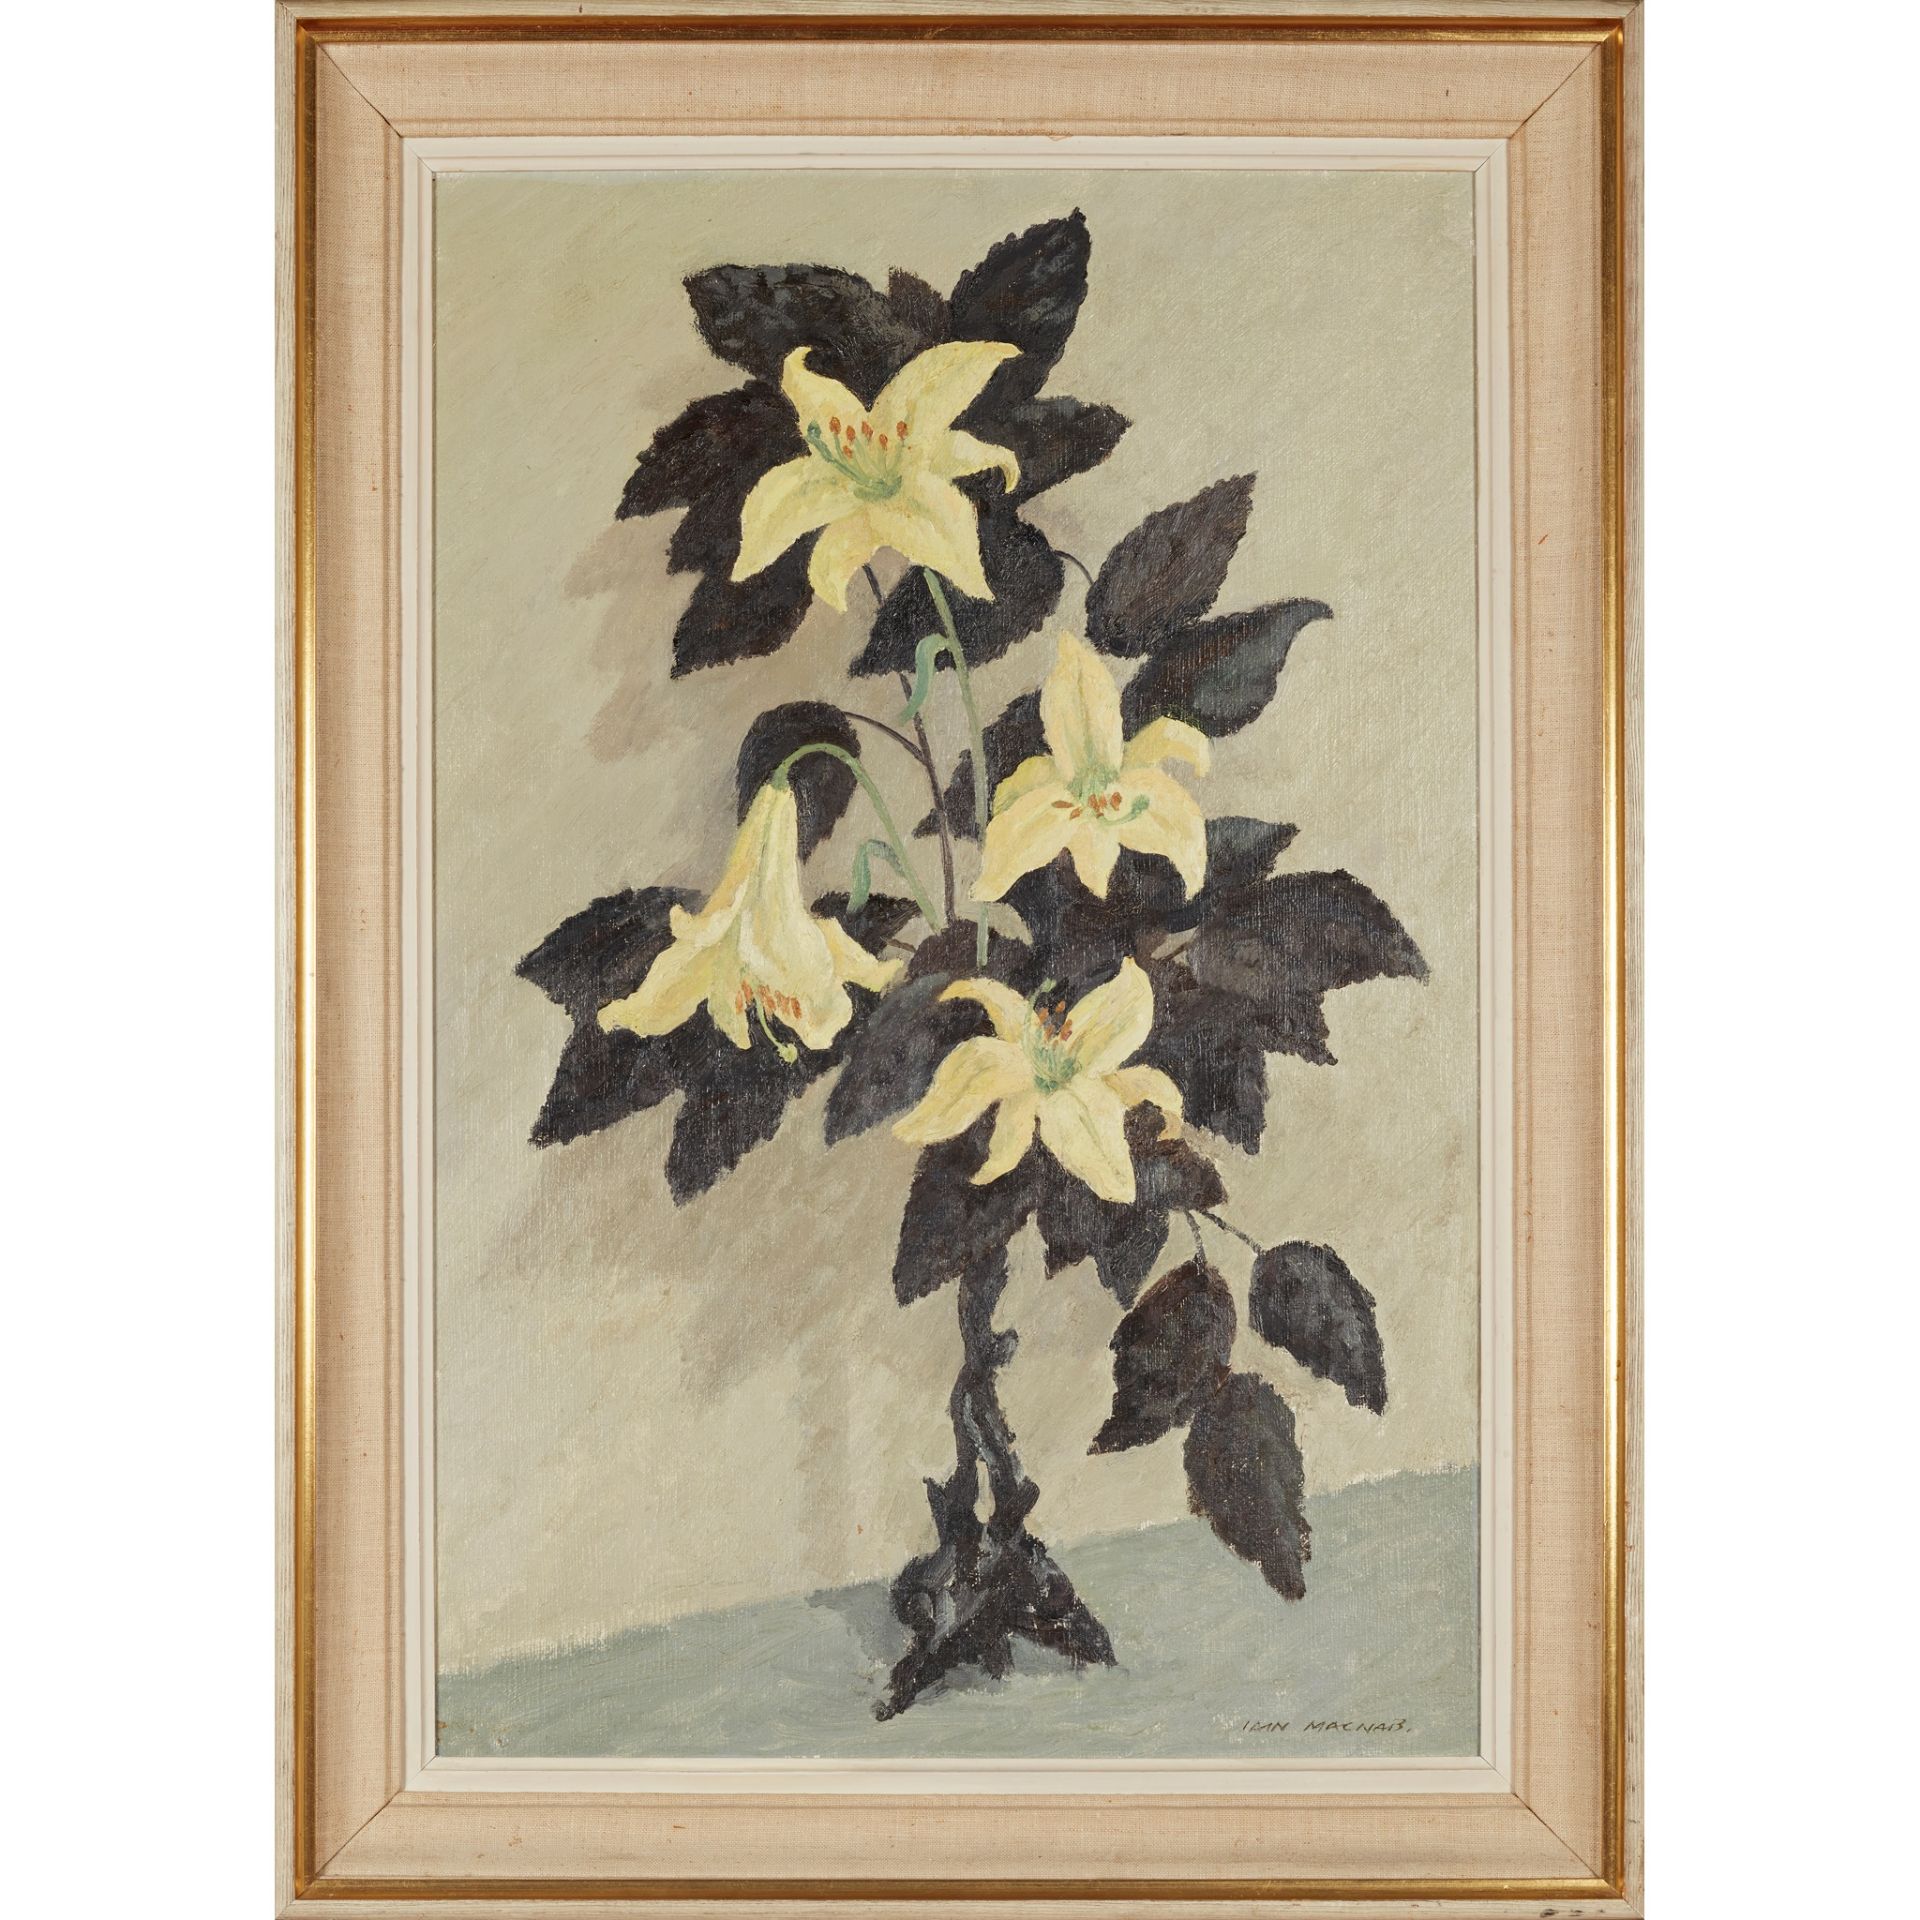 § ‡ IAIN MACNAB (BRITISH 1890-1967) FLOWER PIECE - Image 2 of 3